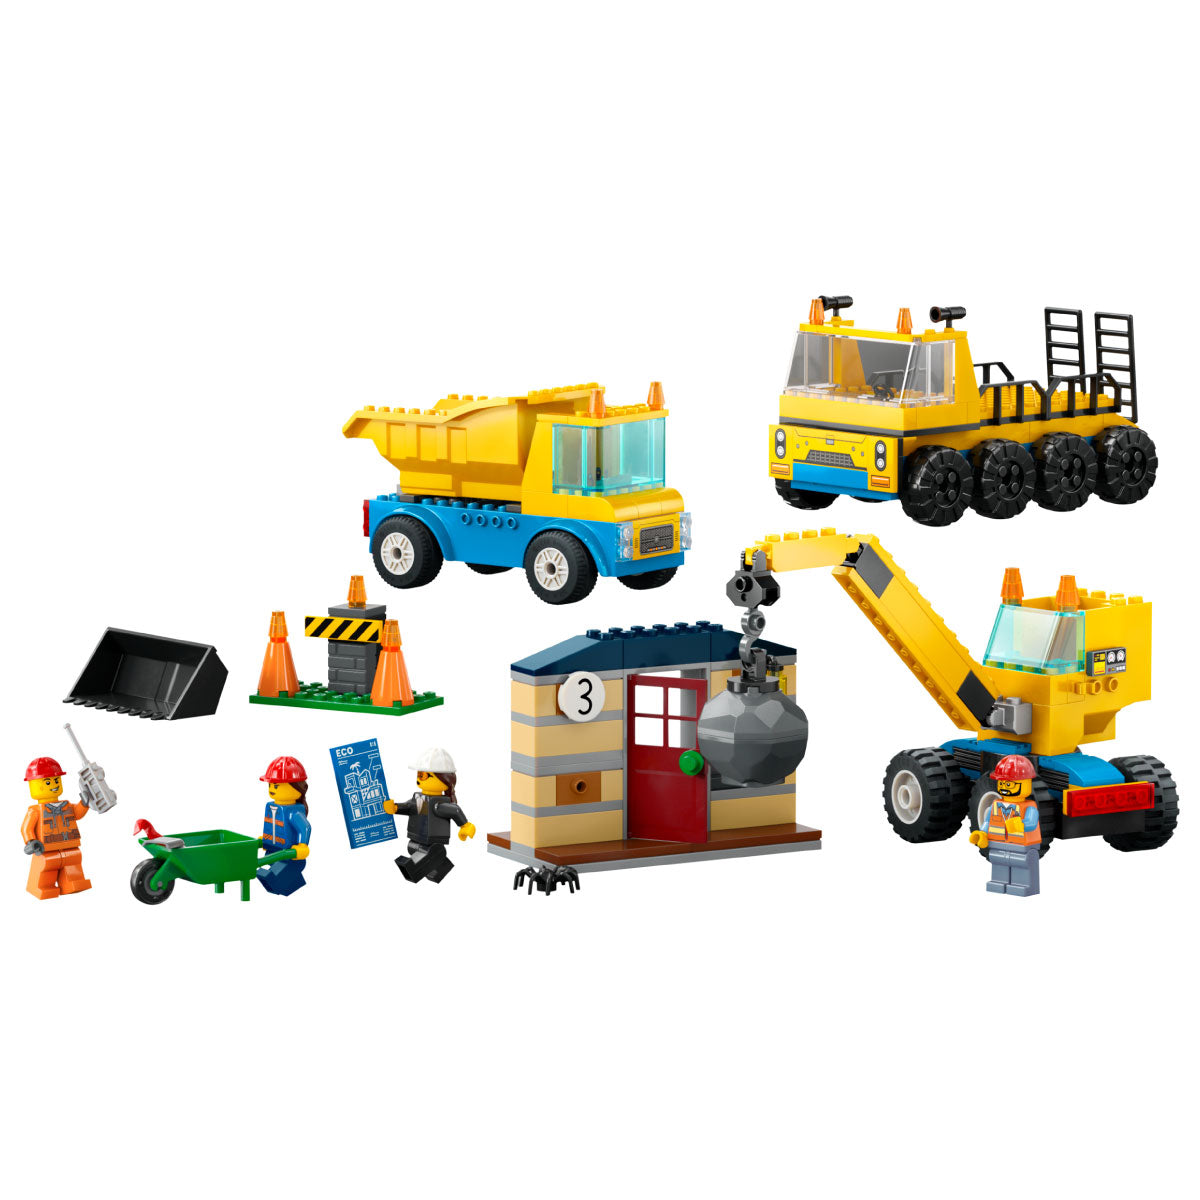 LEGO City Construction Trucks and Wrecking Ball Crane